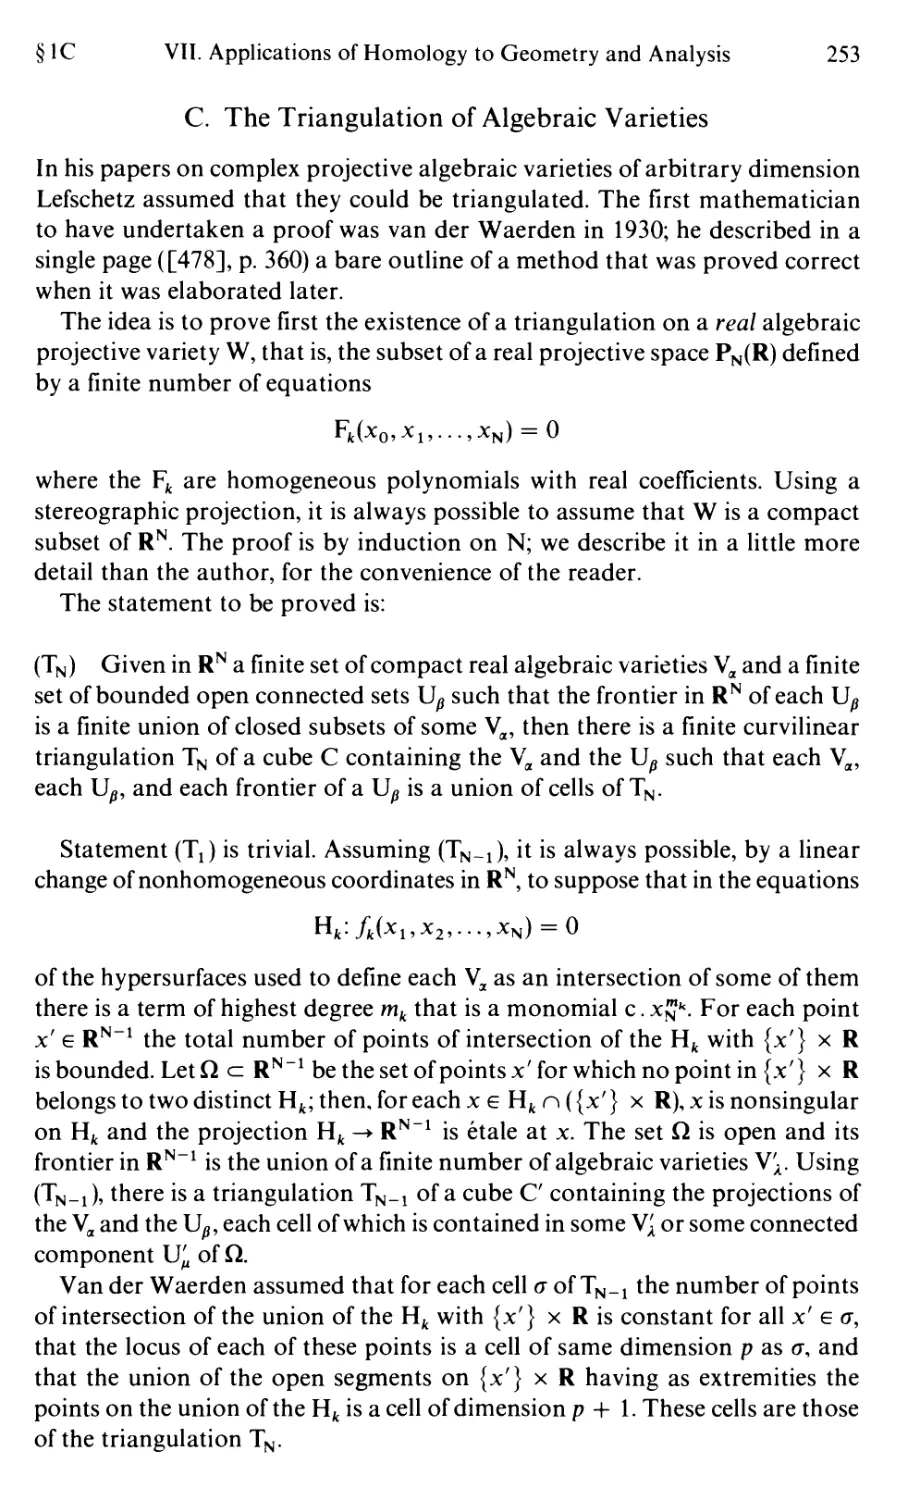 C. The Triangulation of Algebraic Varieties